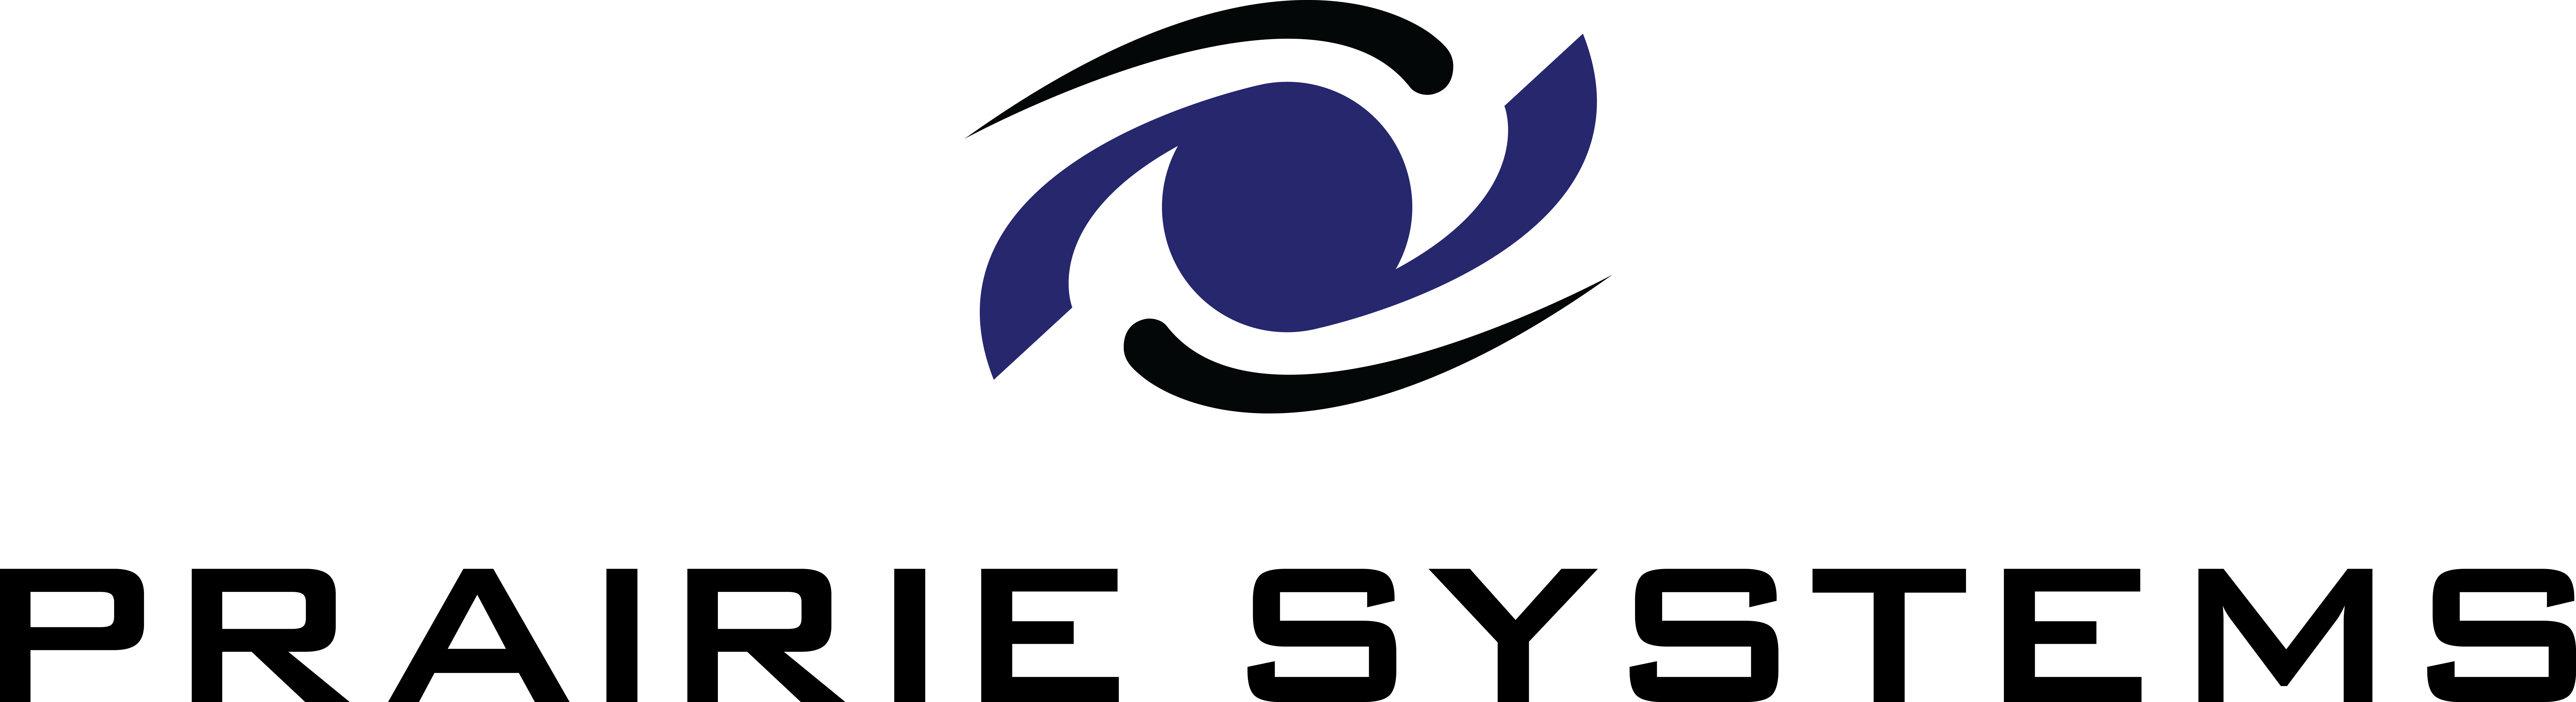 Prairie Systems Logo